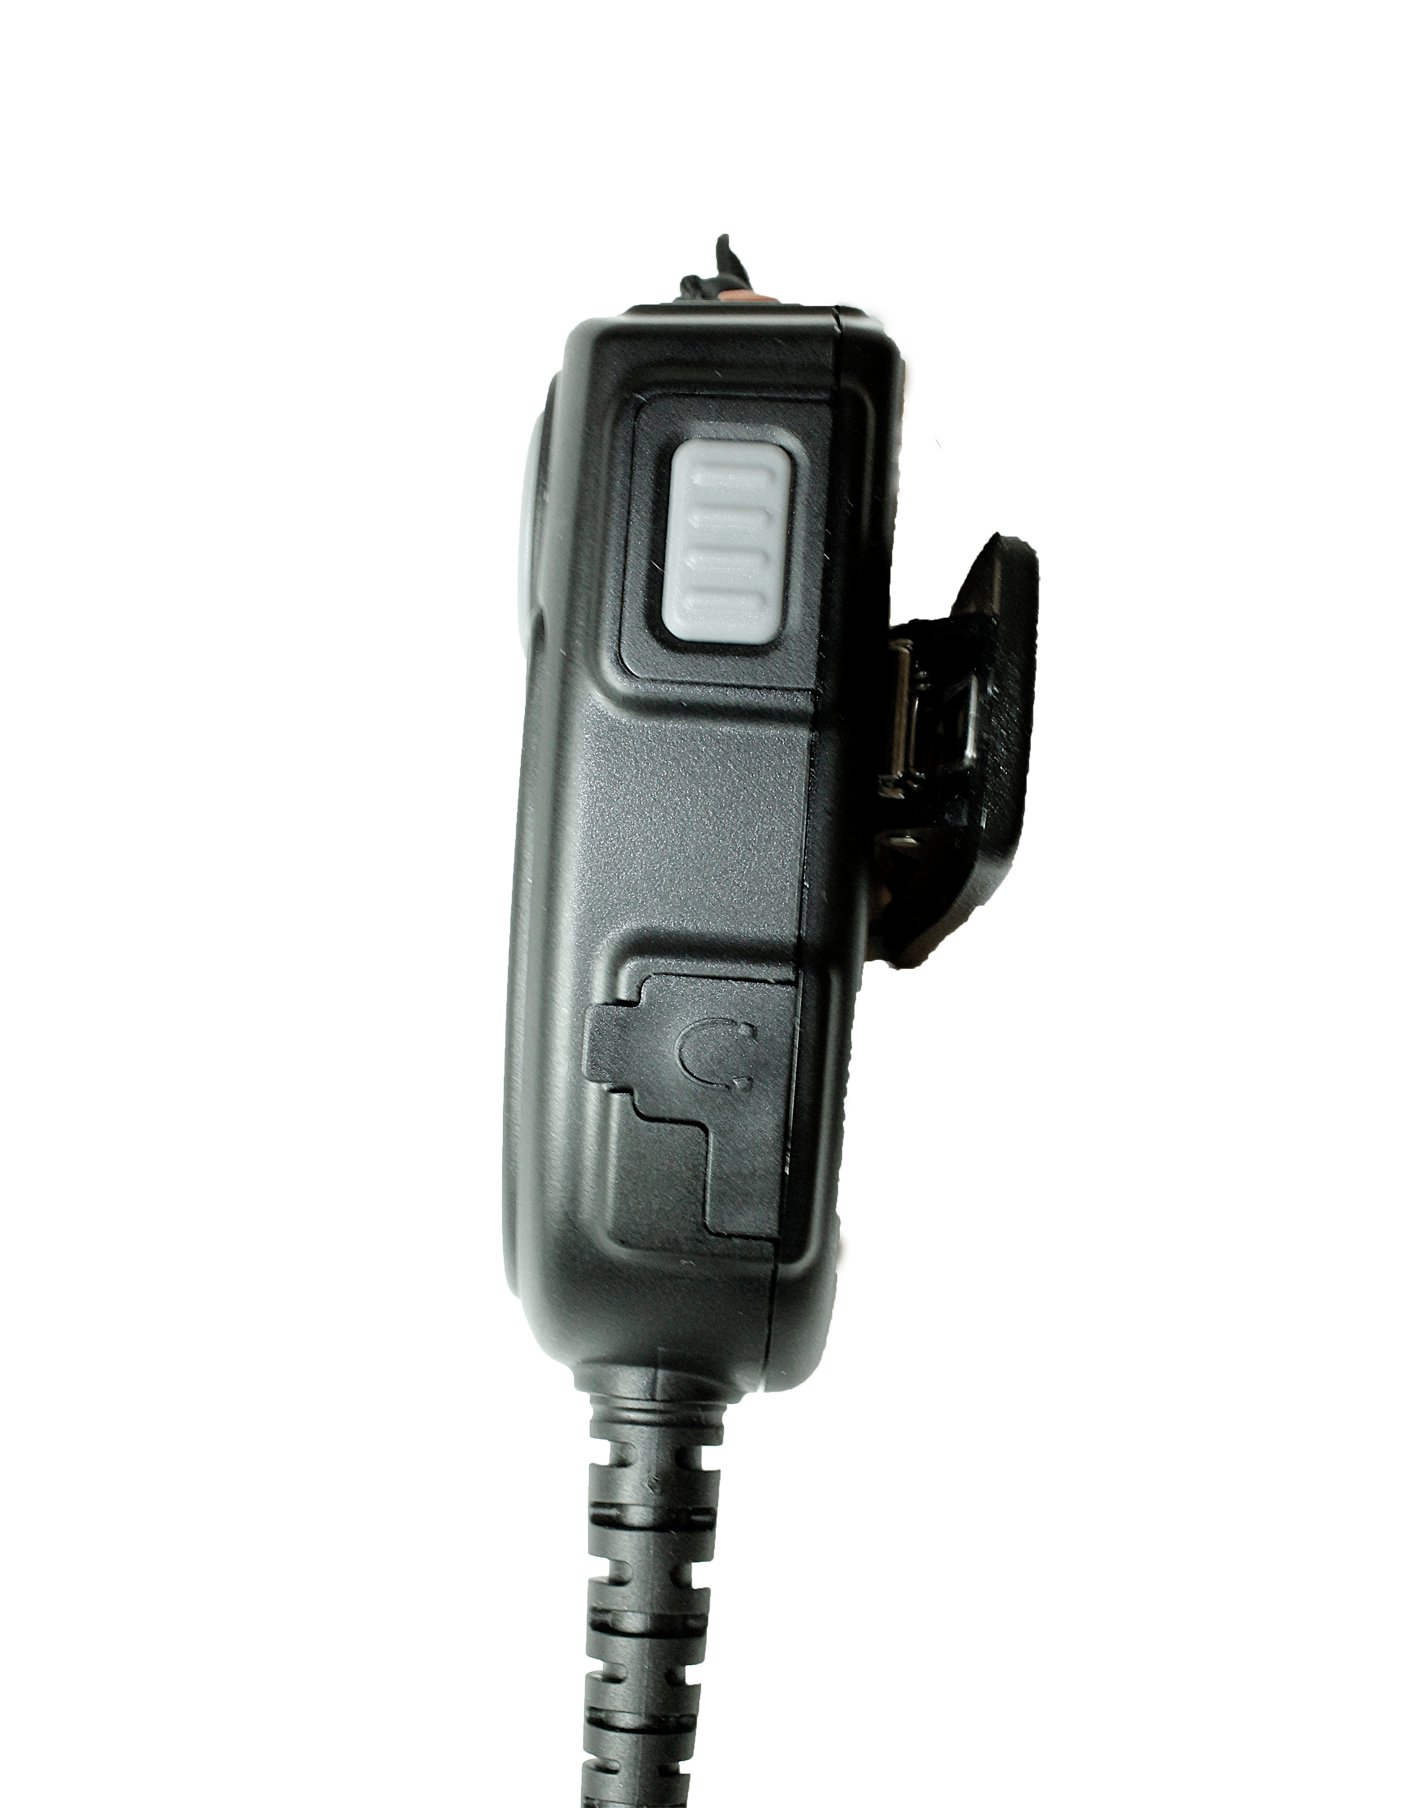 TITAN Lautsprechermikrofon MM20 mit Nexus 01 passend für Motorola GP900/HT1000/MT2000